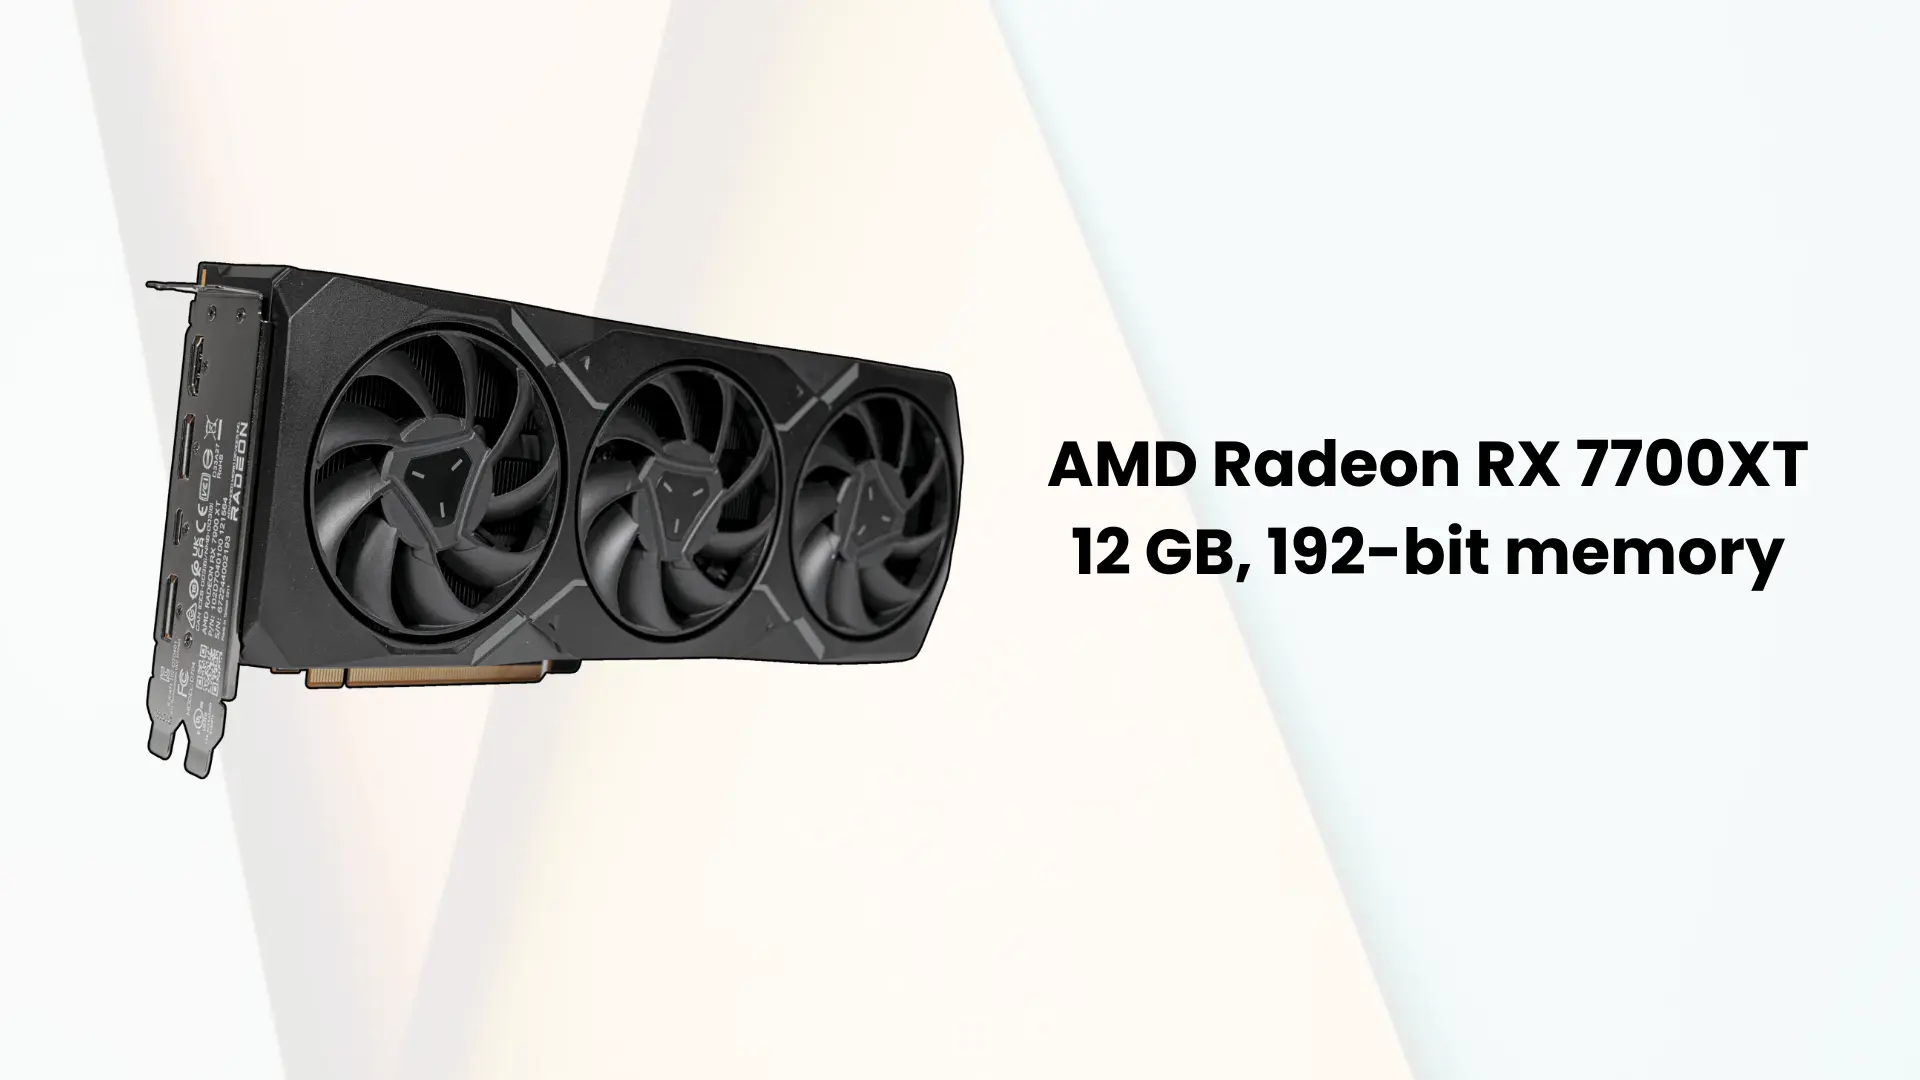 AMD Radeon RX 7700XT 12 GB, 192-bit memory leaked specs